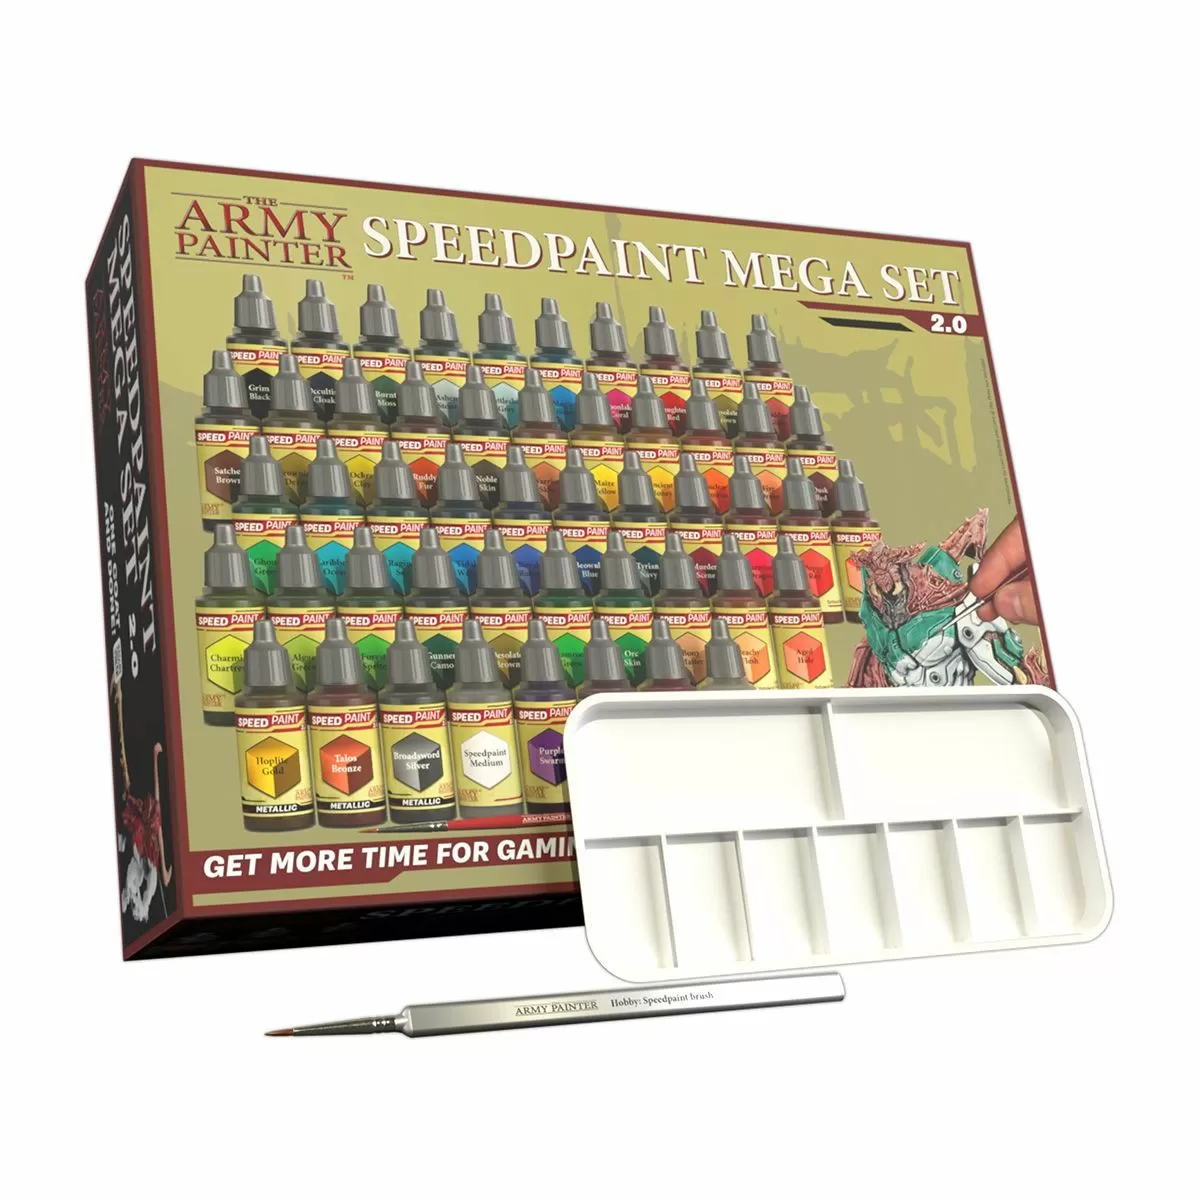 The Army Painter Gamemaster Miniature Paint Brushes - Model Paint Brushes for Miniature Painting - Acrylic Paint Brush Set with Bonus Item for